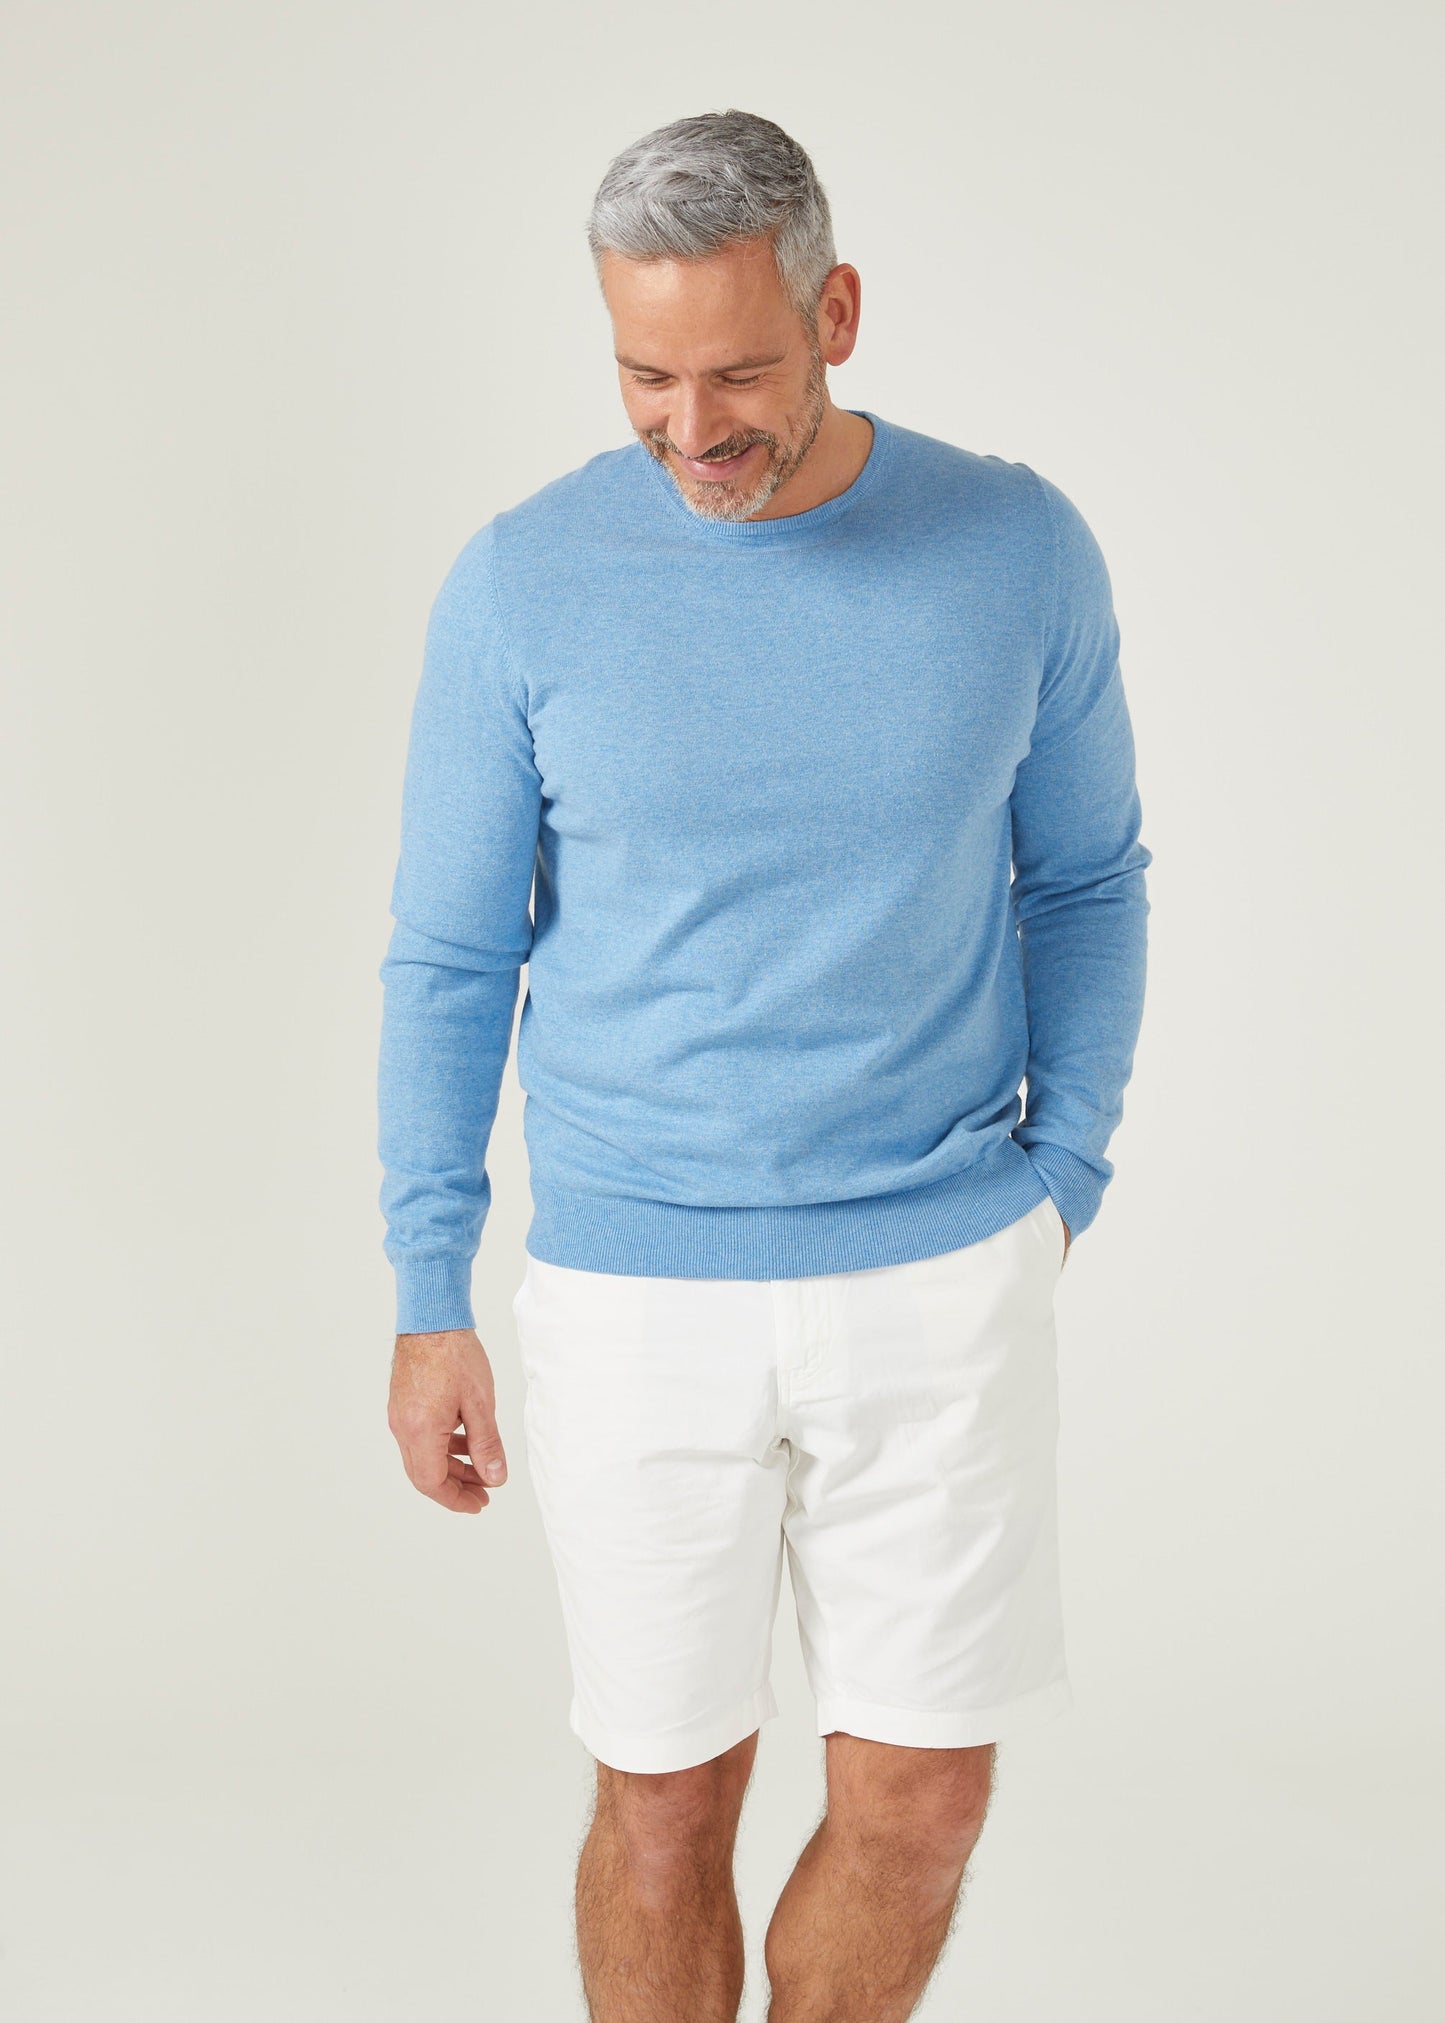 men's luxury cotton jumper in Carolina blue